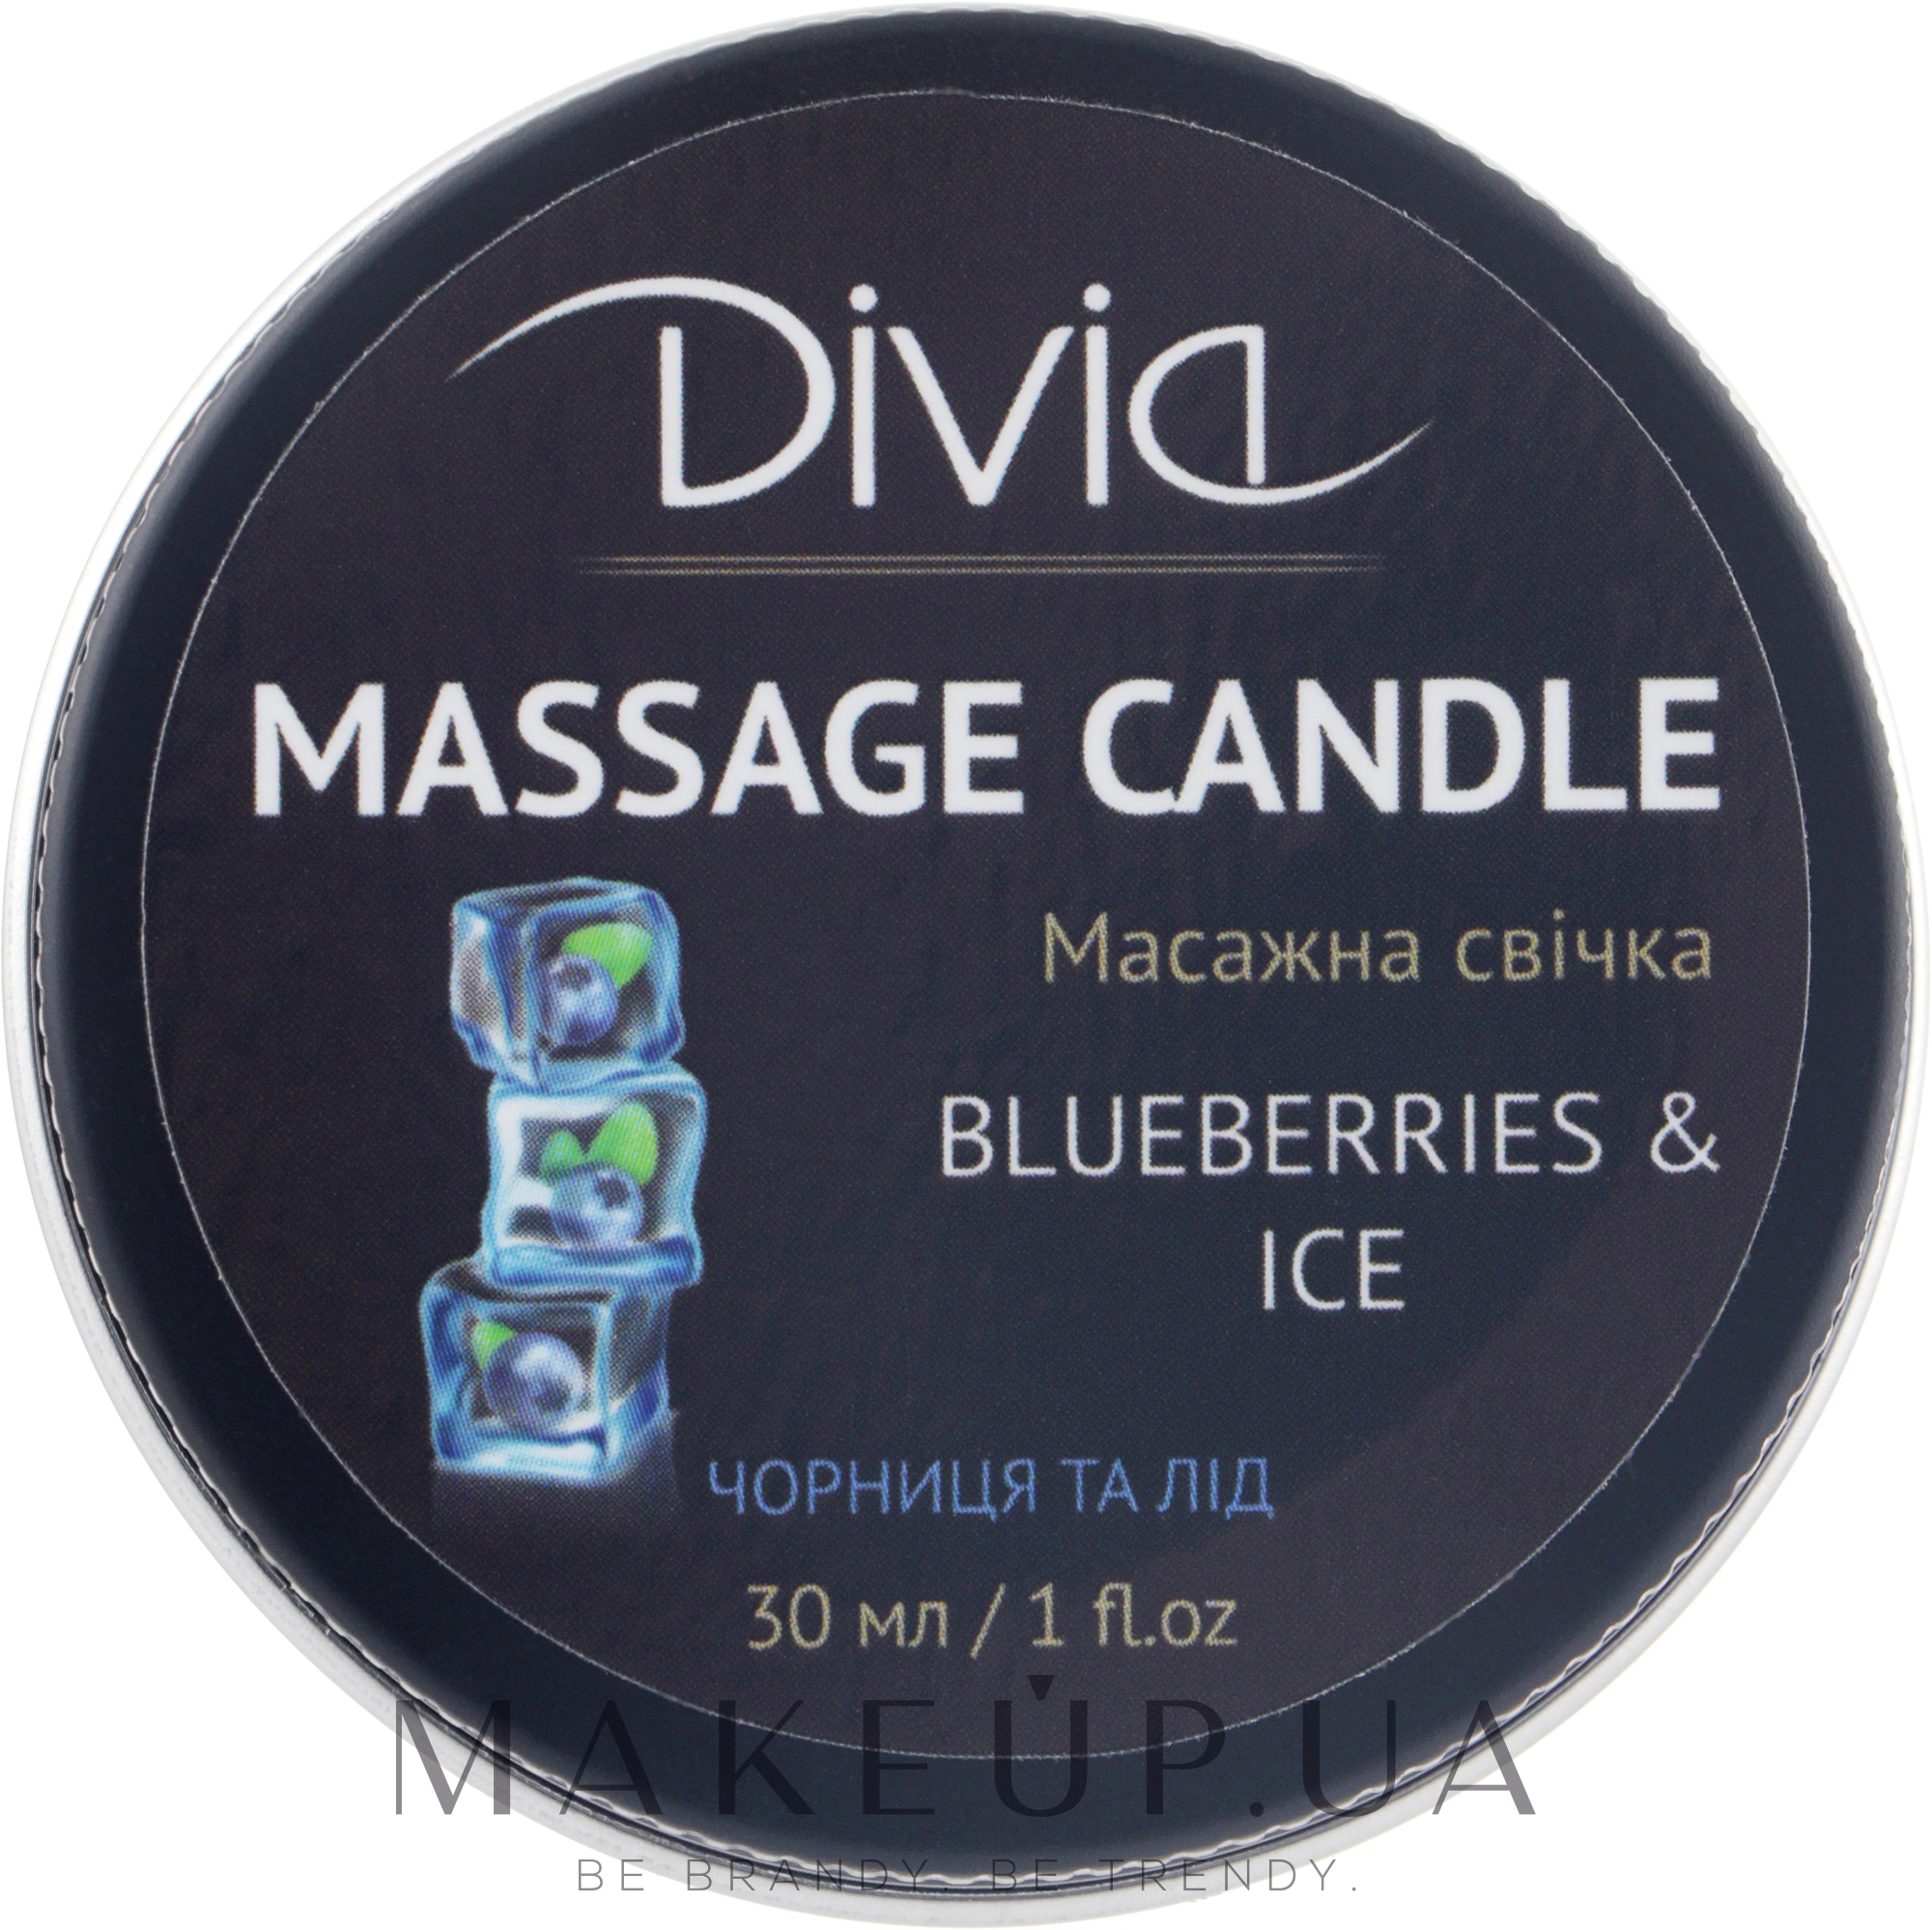 Свічка масажна для рук і тіла "Чорниця та лід", Di1570 (30 мл)  - Divia Massage Candle Hand & Body Blueberries & Ice Di1570 (30 ml) — фото 30ml